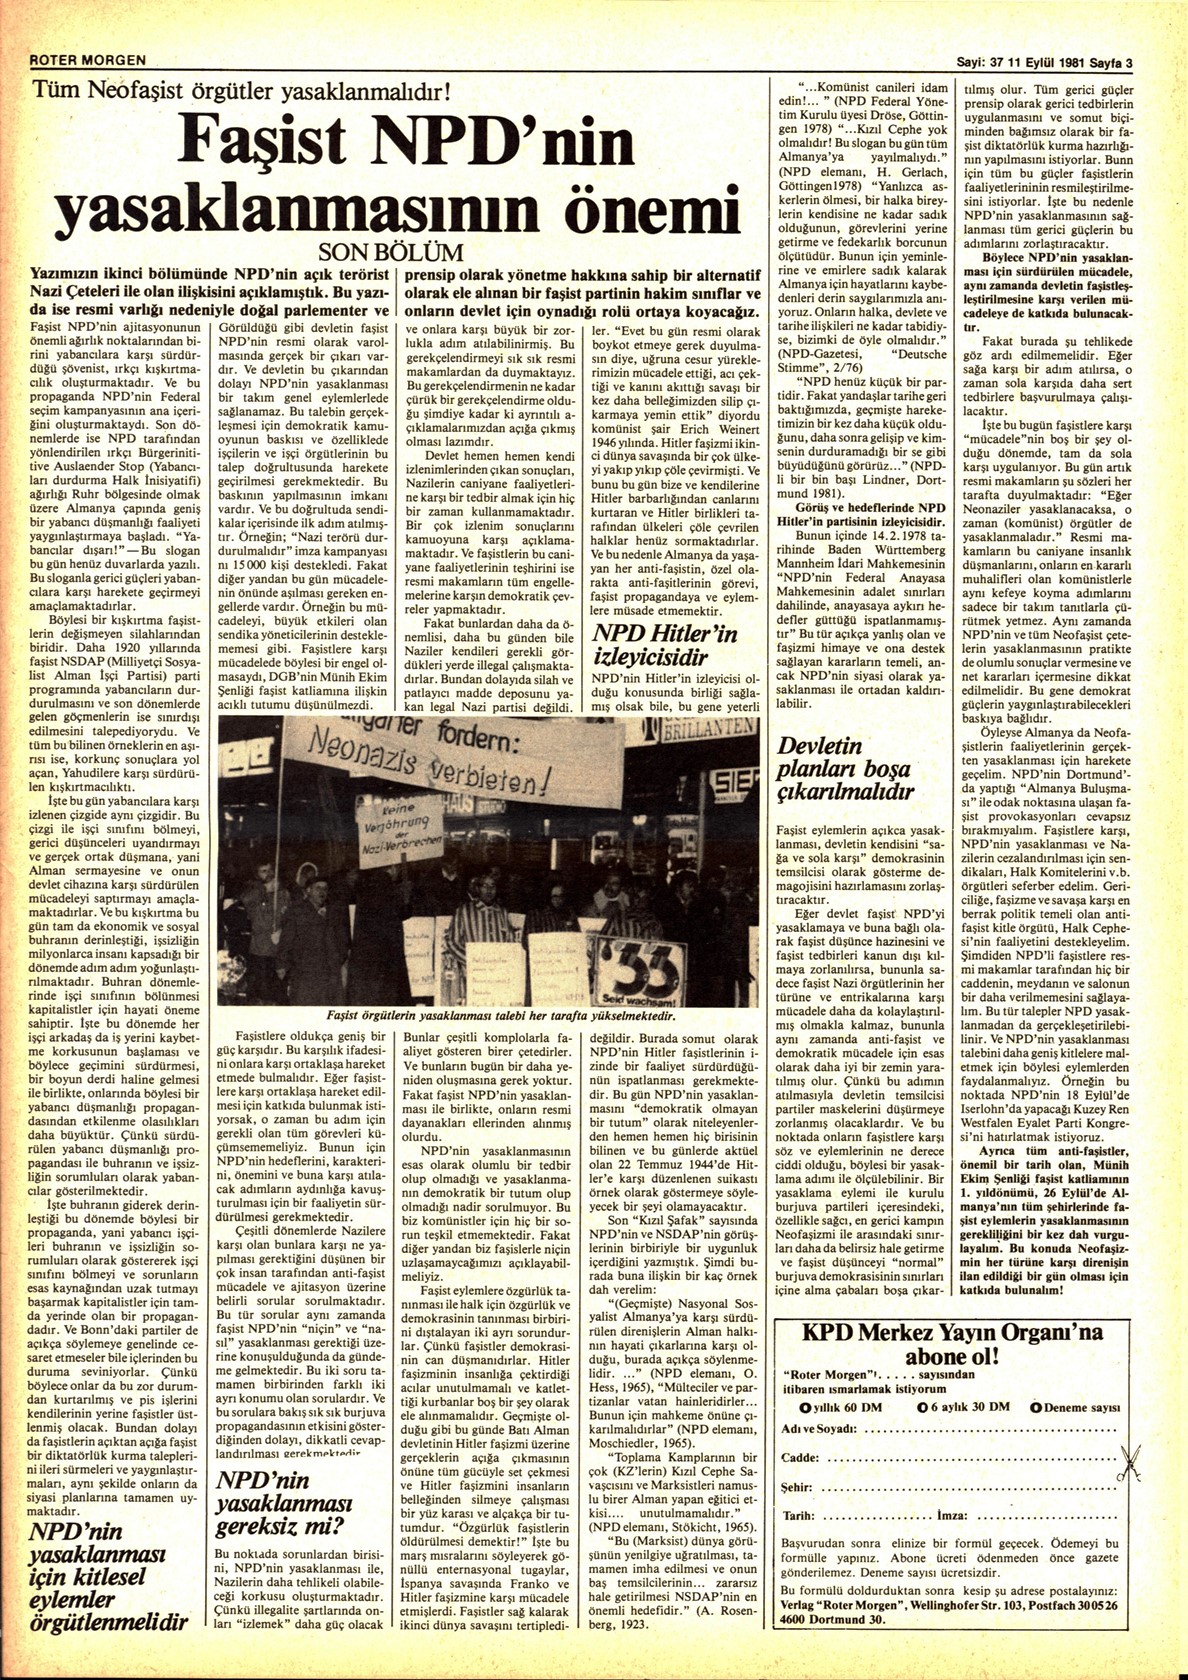 Roter Morgen, 15. Jg., 11. September 1981, Nr. 37, Seite 16